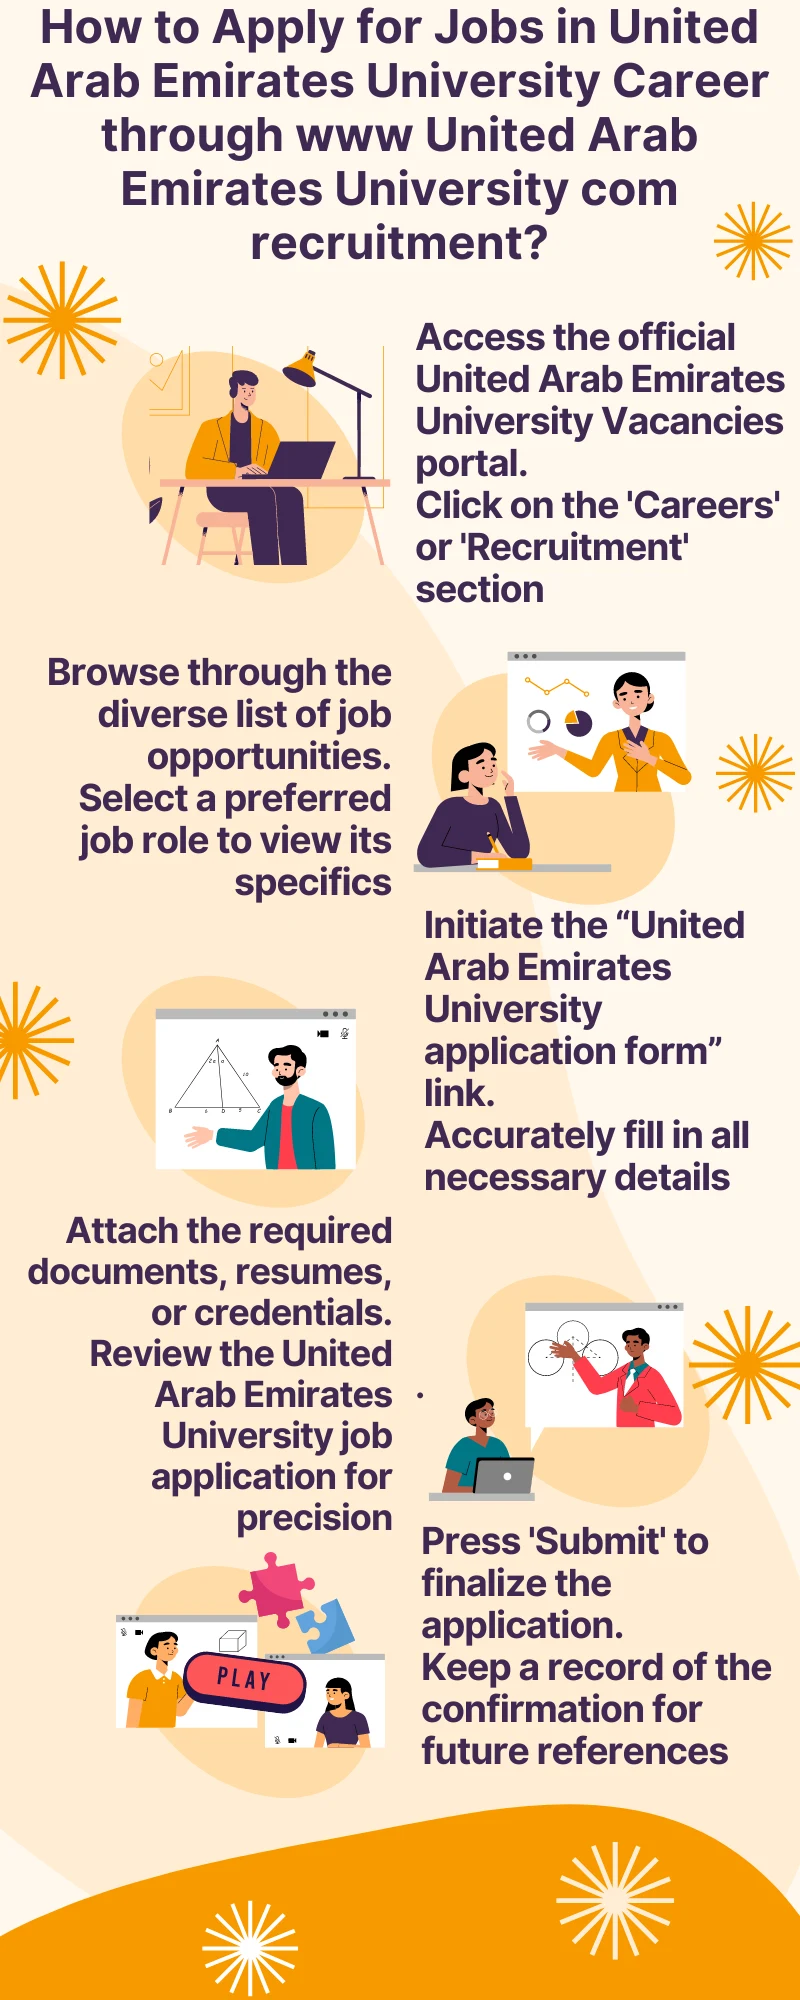 How to Apply for Jobs in United Arab Emirates University Career through www United Arab Emirates University com recruitment?